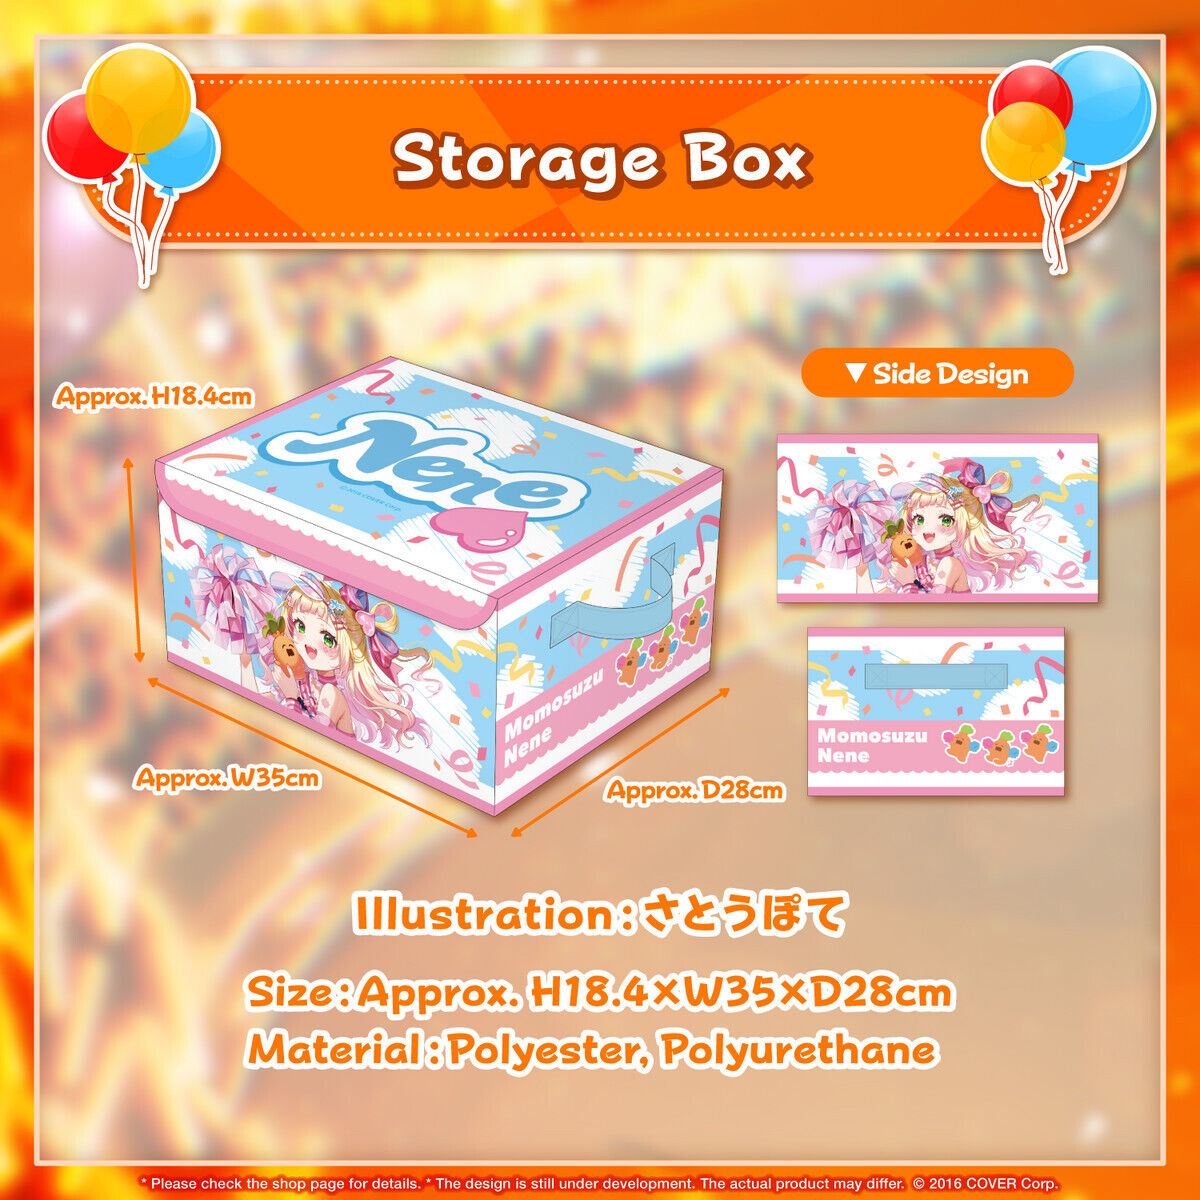 Hololive Momosuzu Nene 3rd Anniversary Celebration - Storage Box